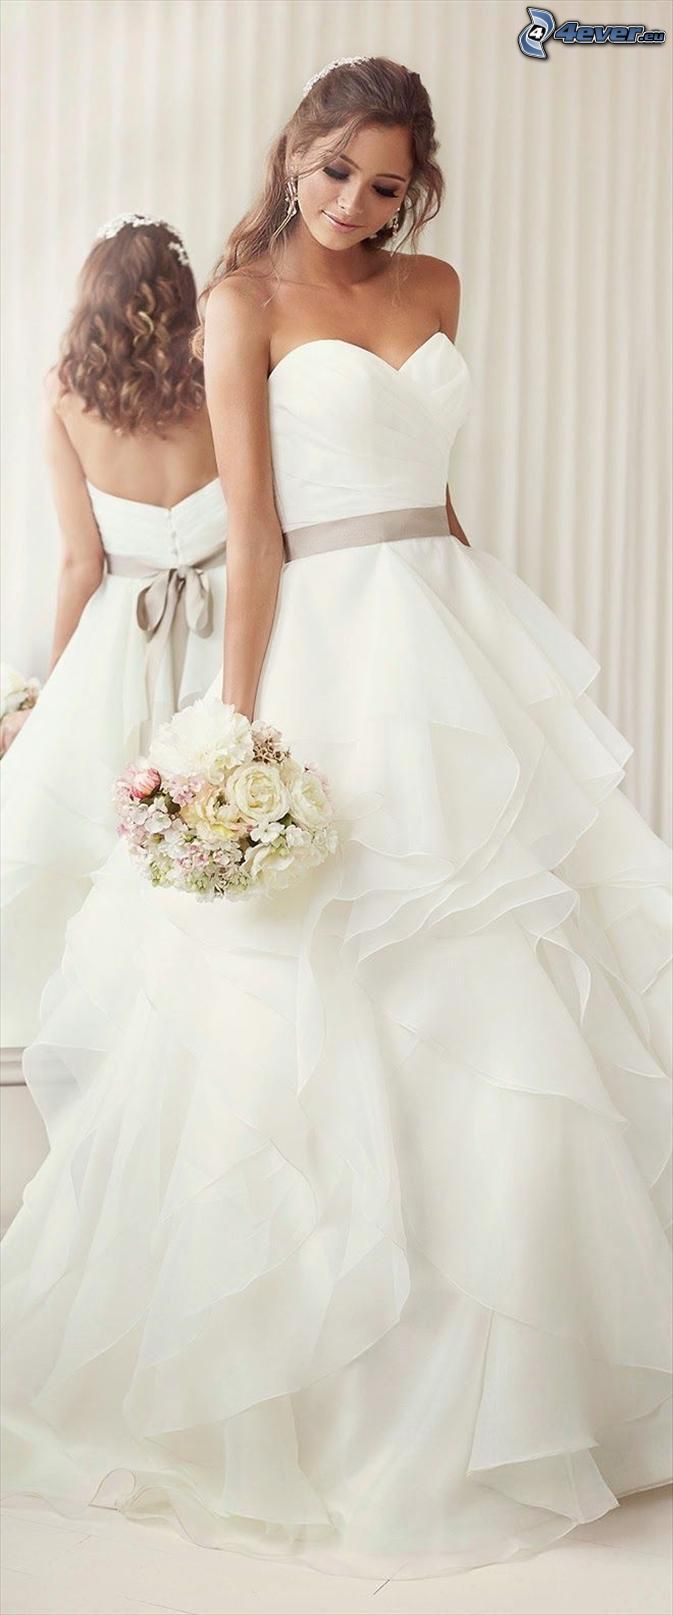 wedding dress, bride, wedding bouquet